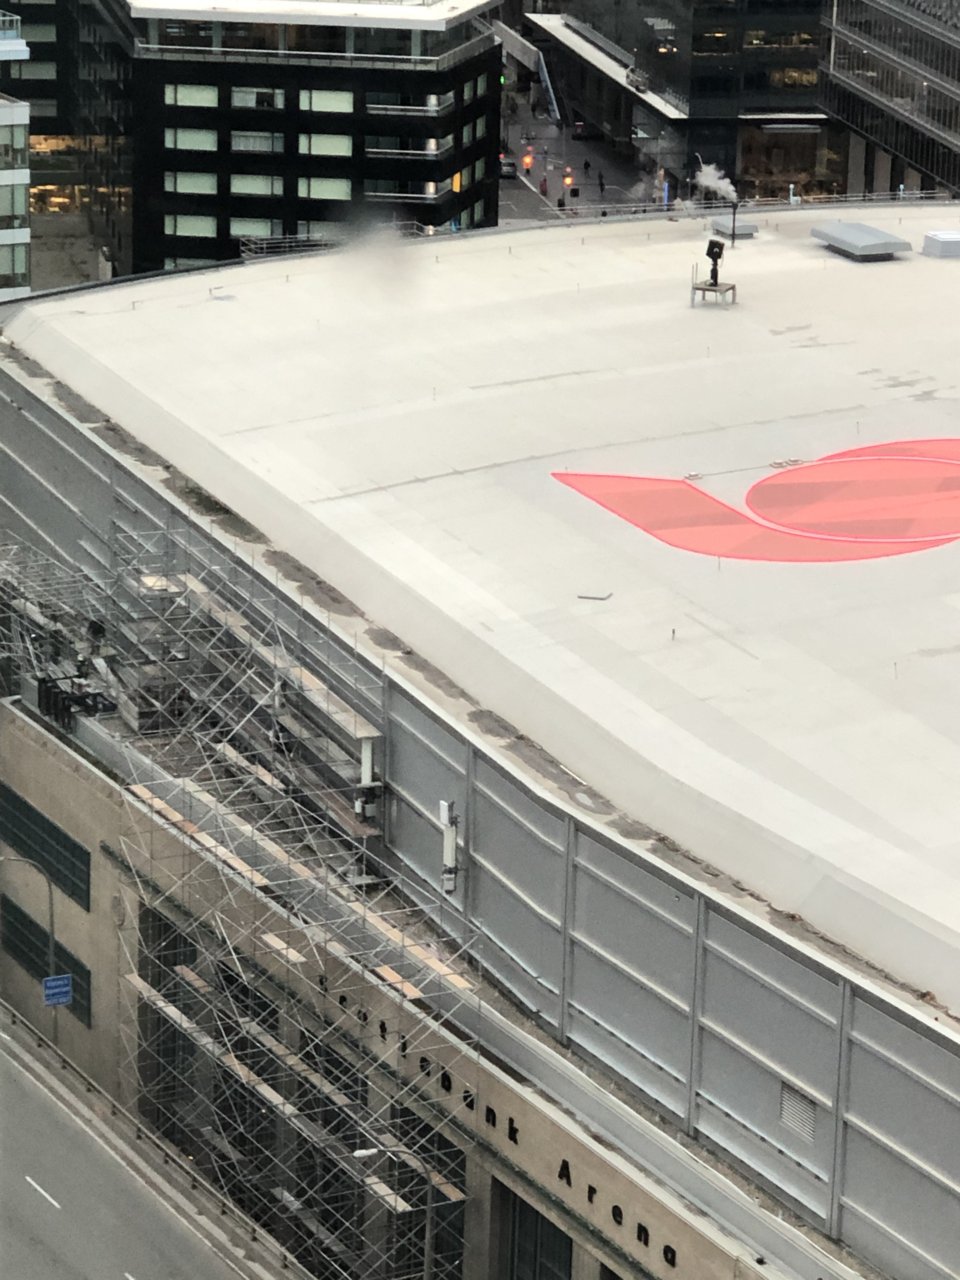 PCL Construction leading $350 million Scotiabank Arena renovation